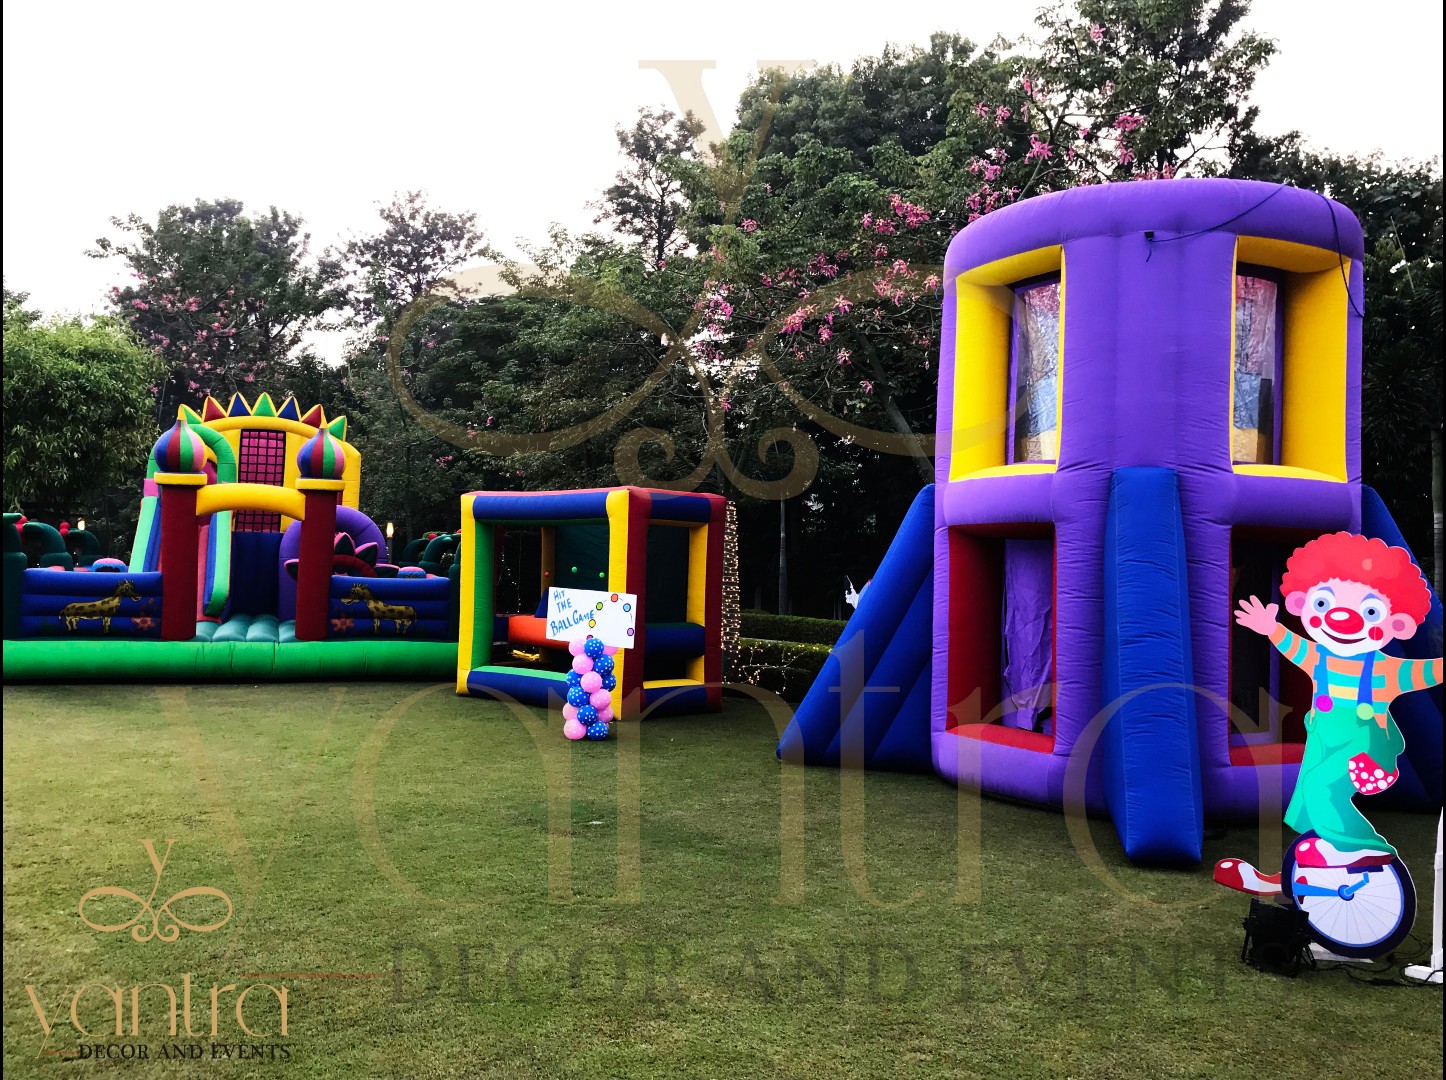 yantra-decor-events-birthday-party-play-area-decor